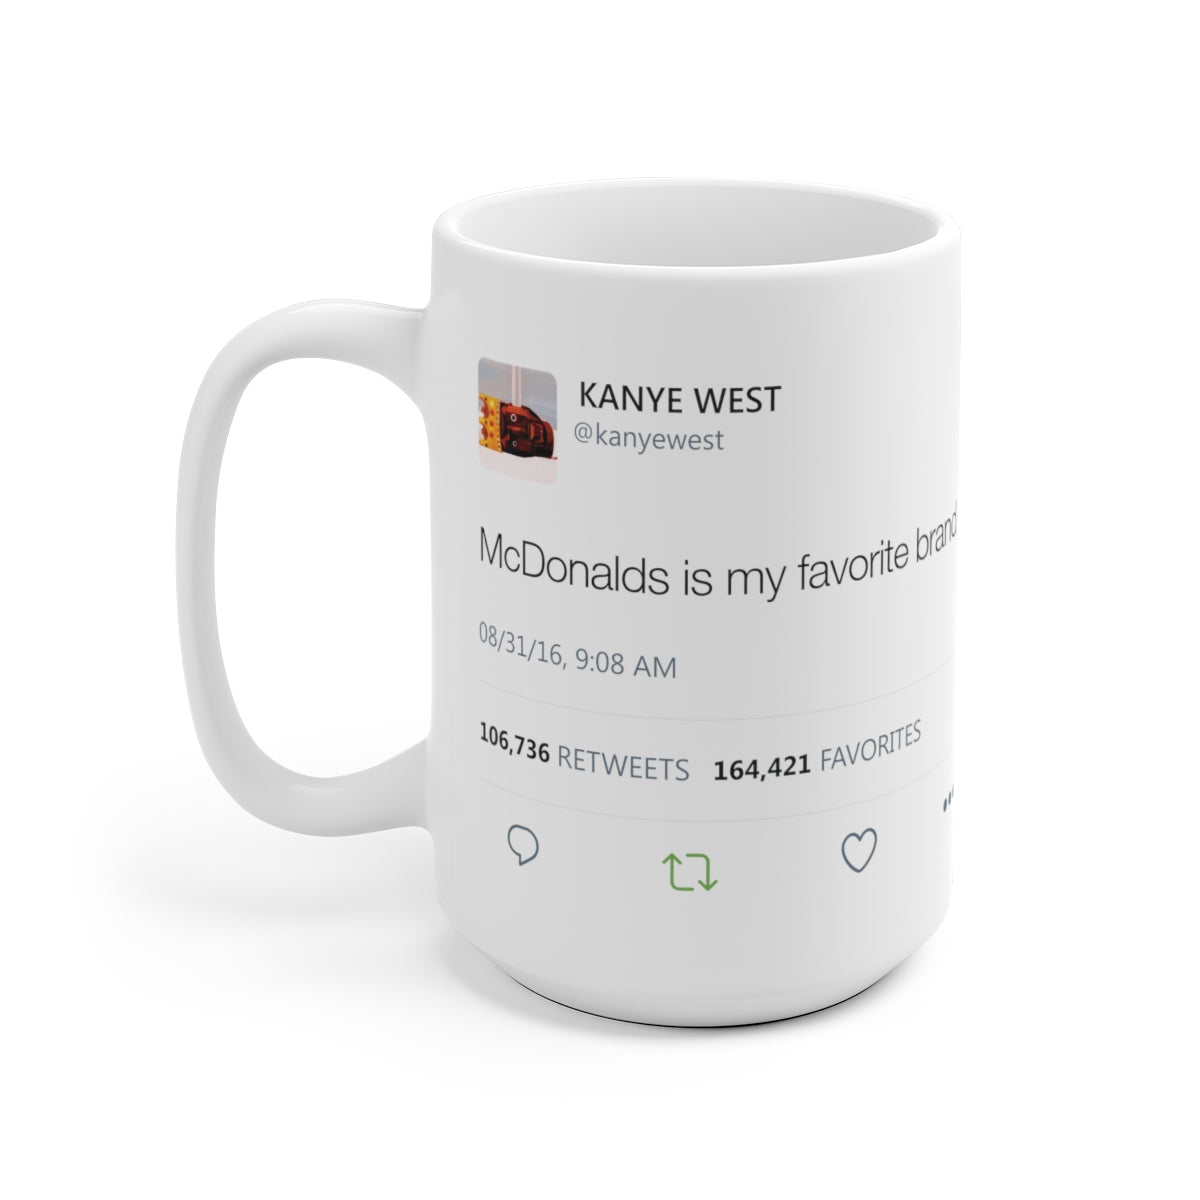 McDonalds is my favorite brand Kanye West Tweet Mug-15oz-Archethype